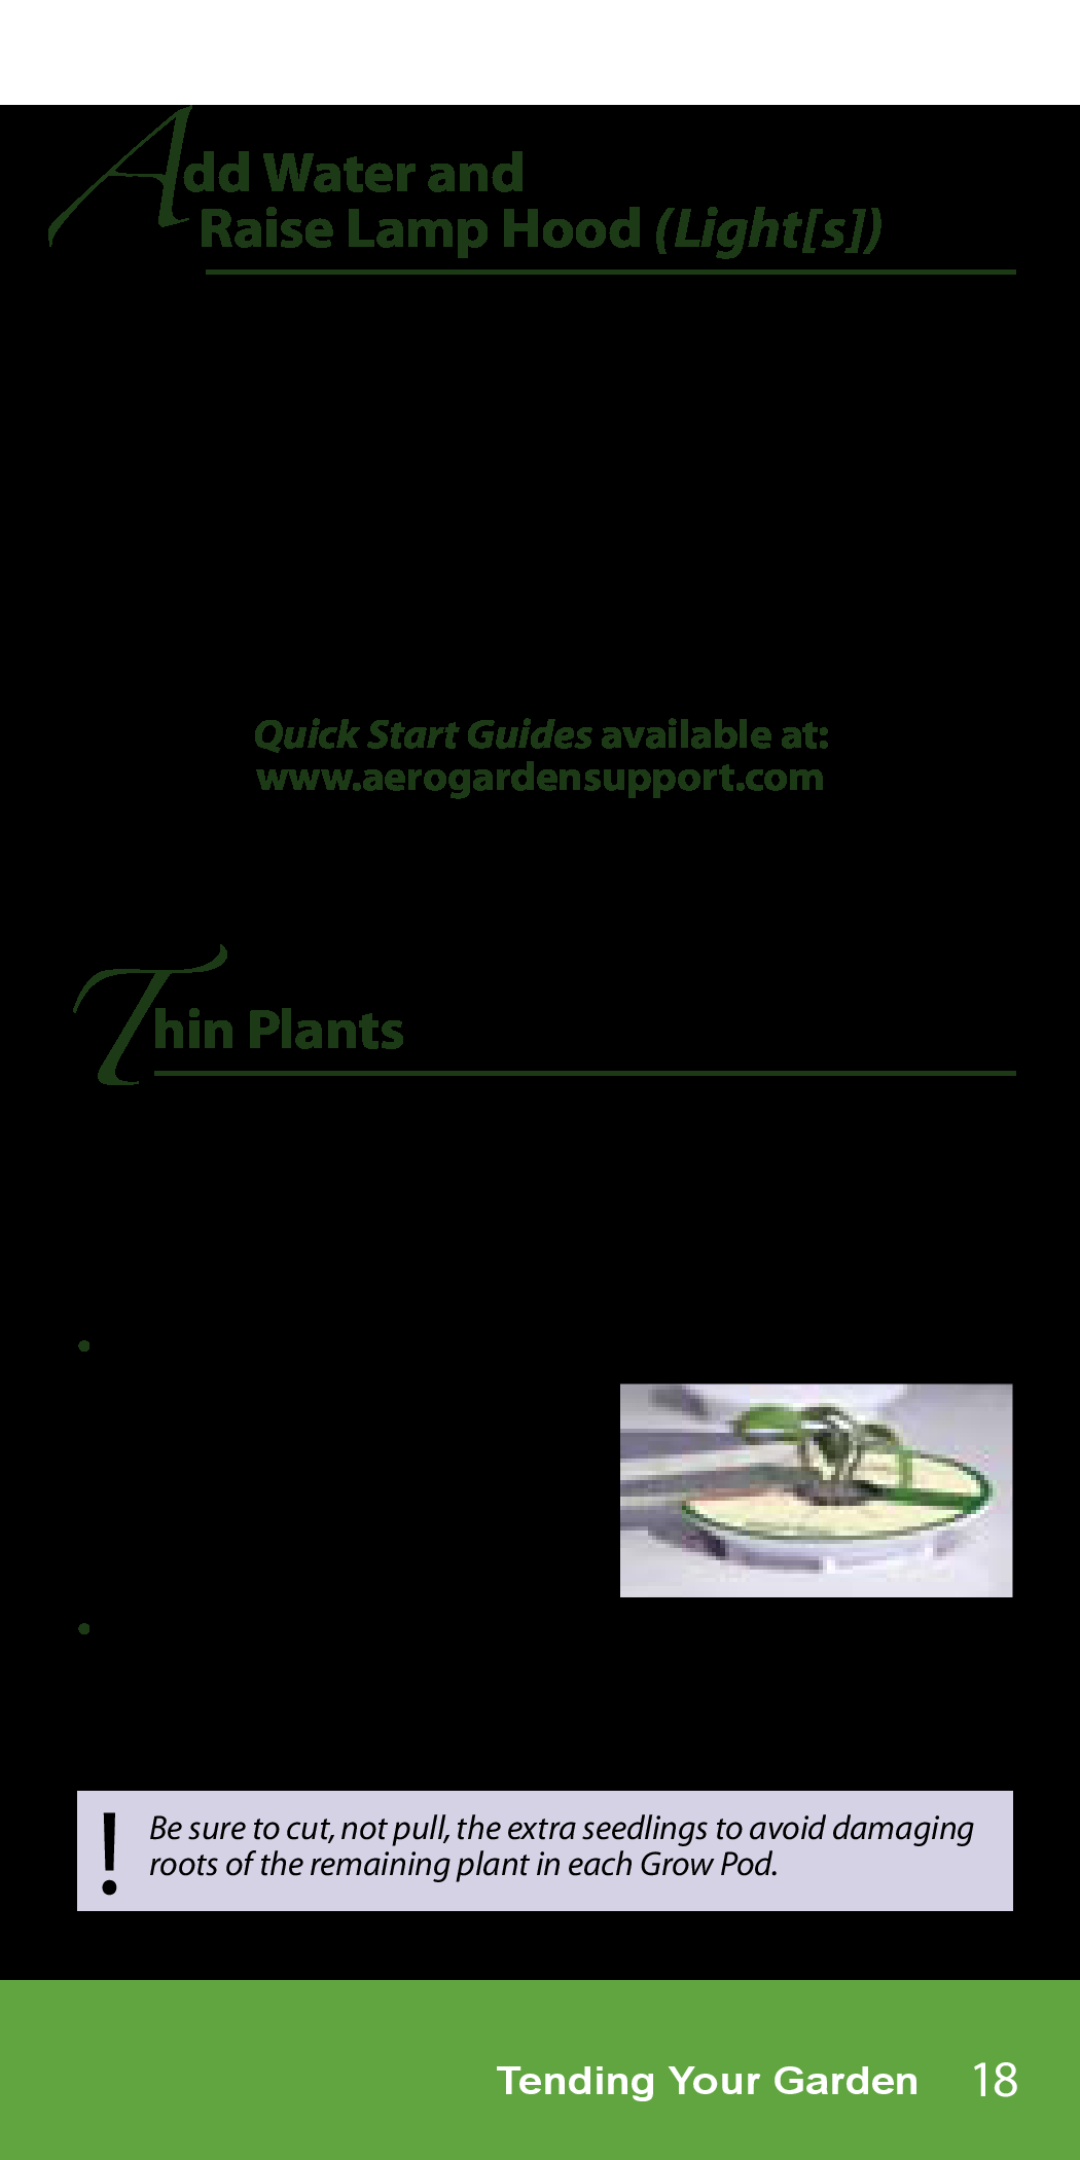 AeroGarden 1-Season, 7-Pod manual Add Water and Raise Lamp Hood Lights, Thin Plants, Tending Your Garden 